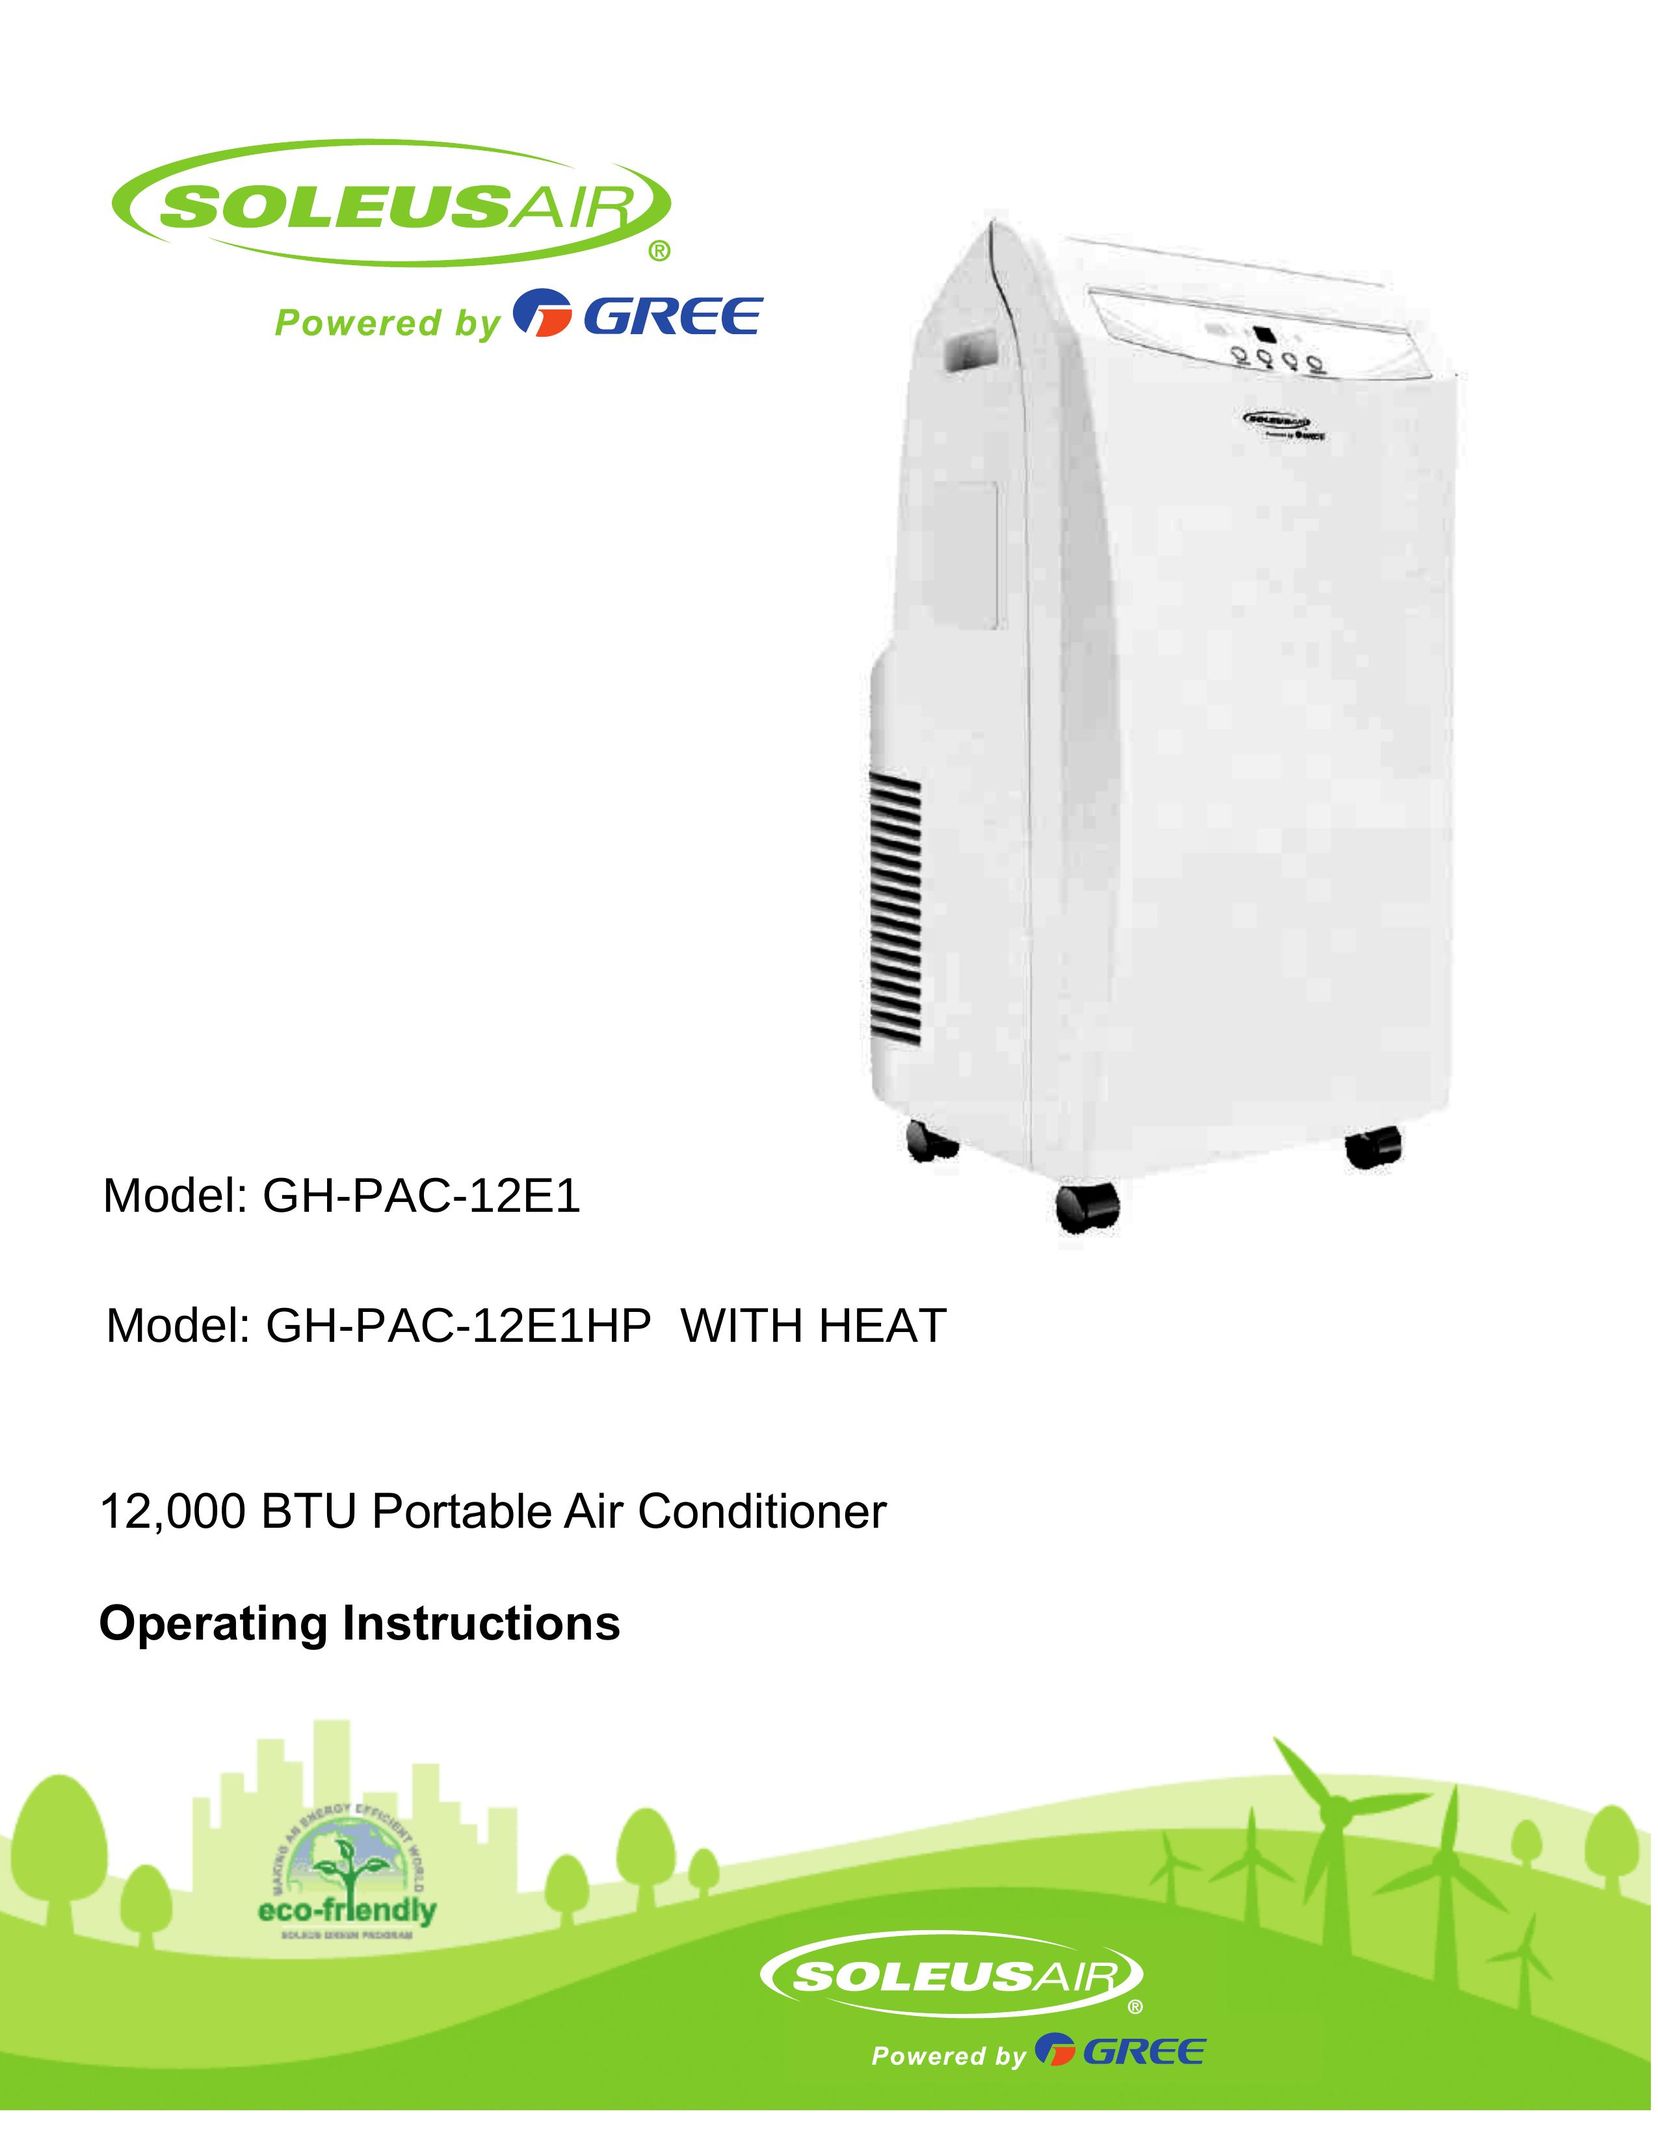 Soleus Air GH-PAC-12E1HP WITH HEAT Air Conditioner User Manual